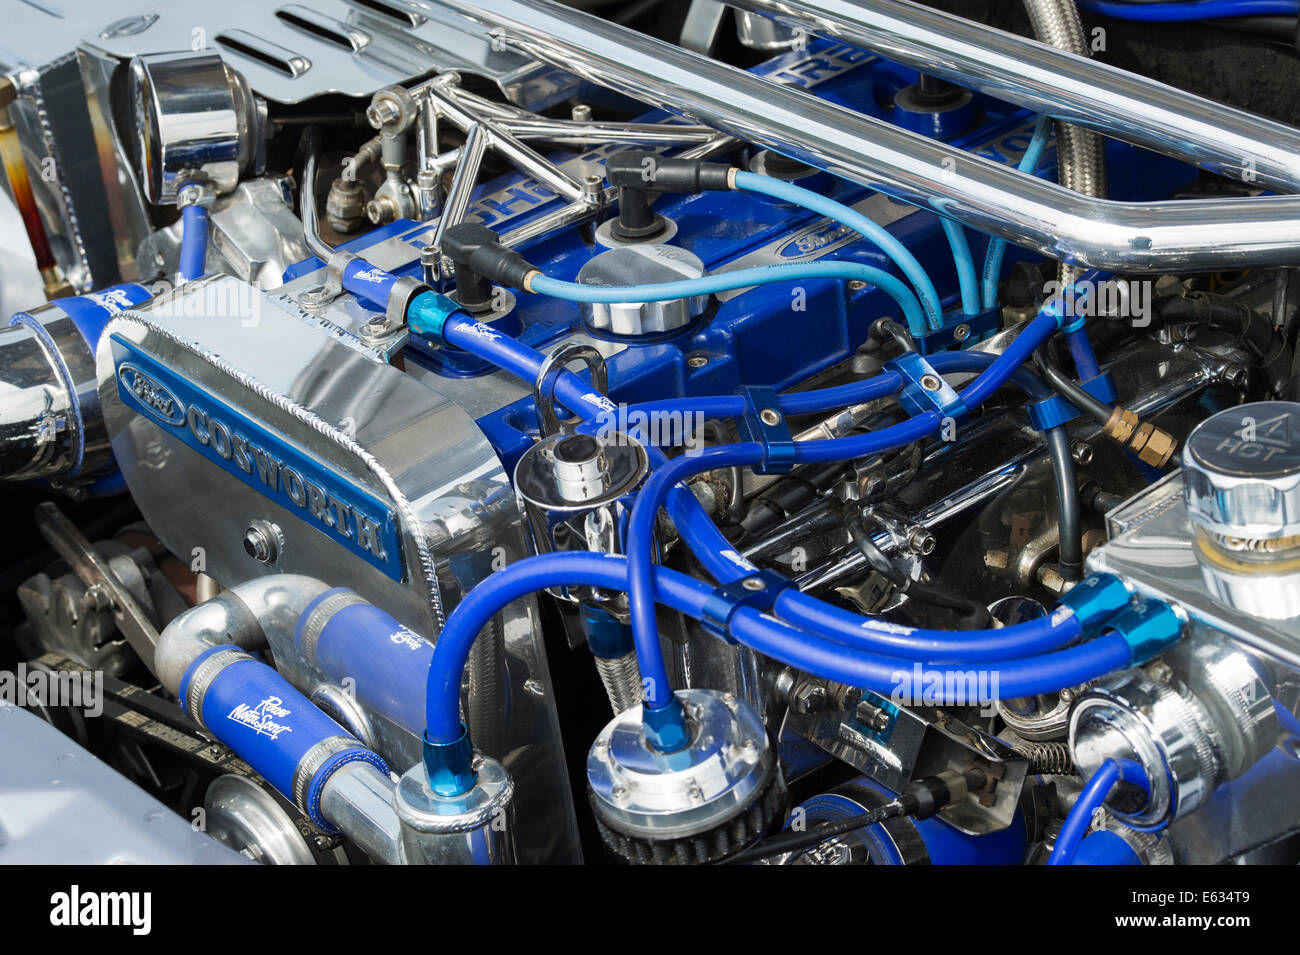 Ford motore Cosworth Foto Stock